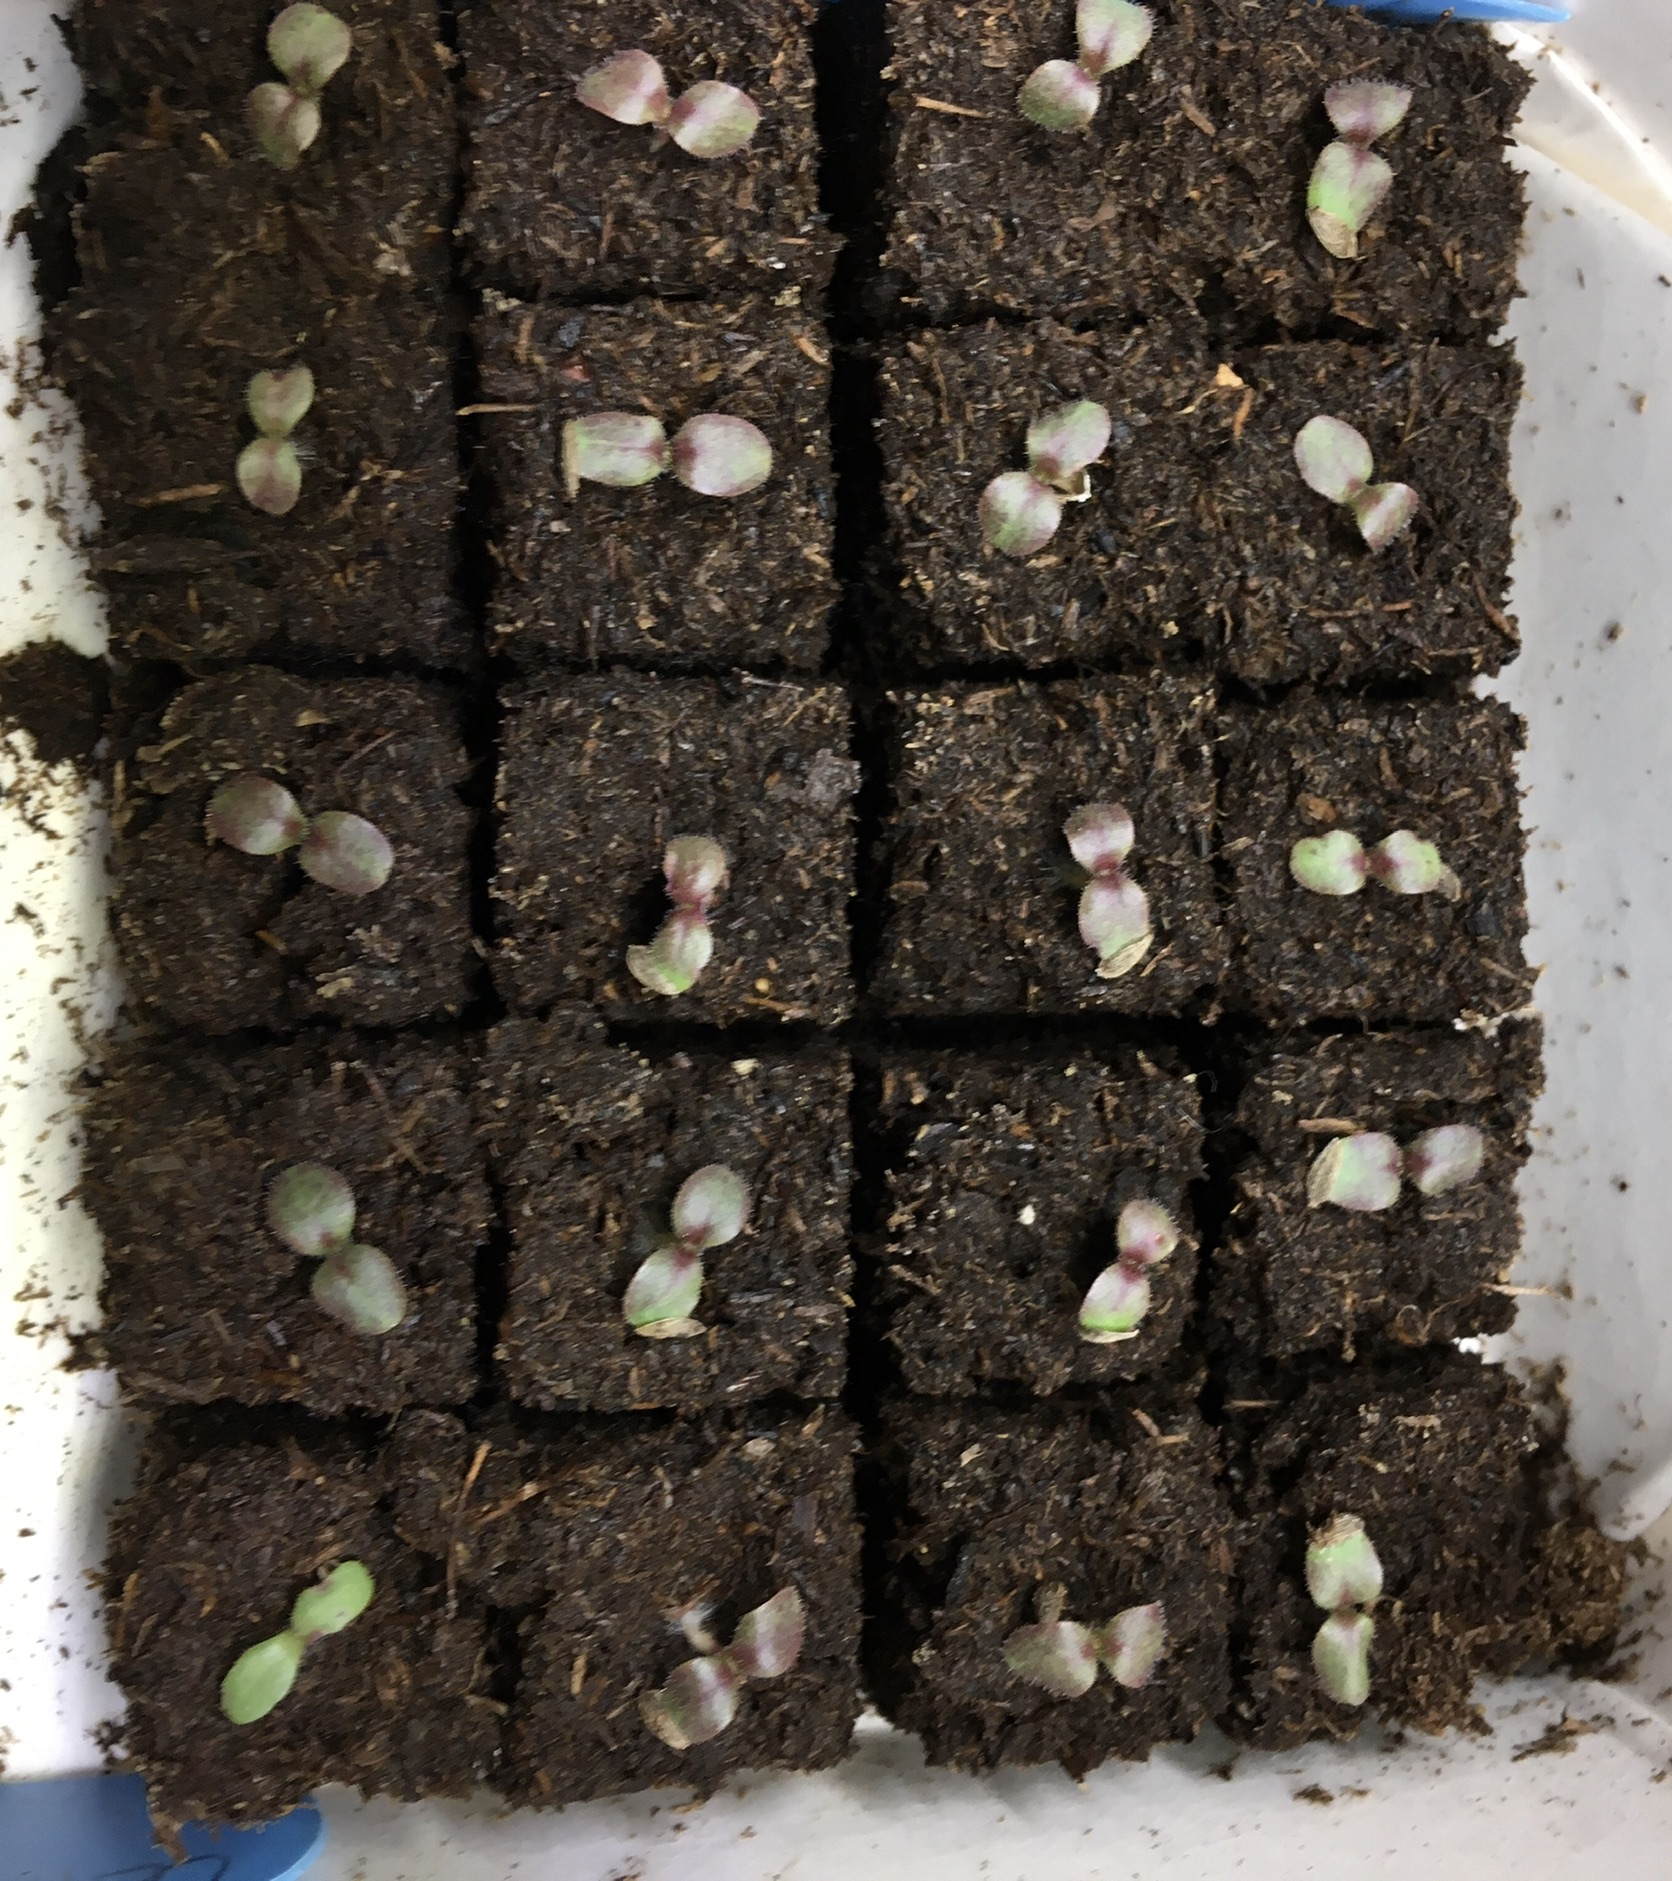 Seed Starting with Mini Soil Blocks